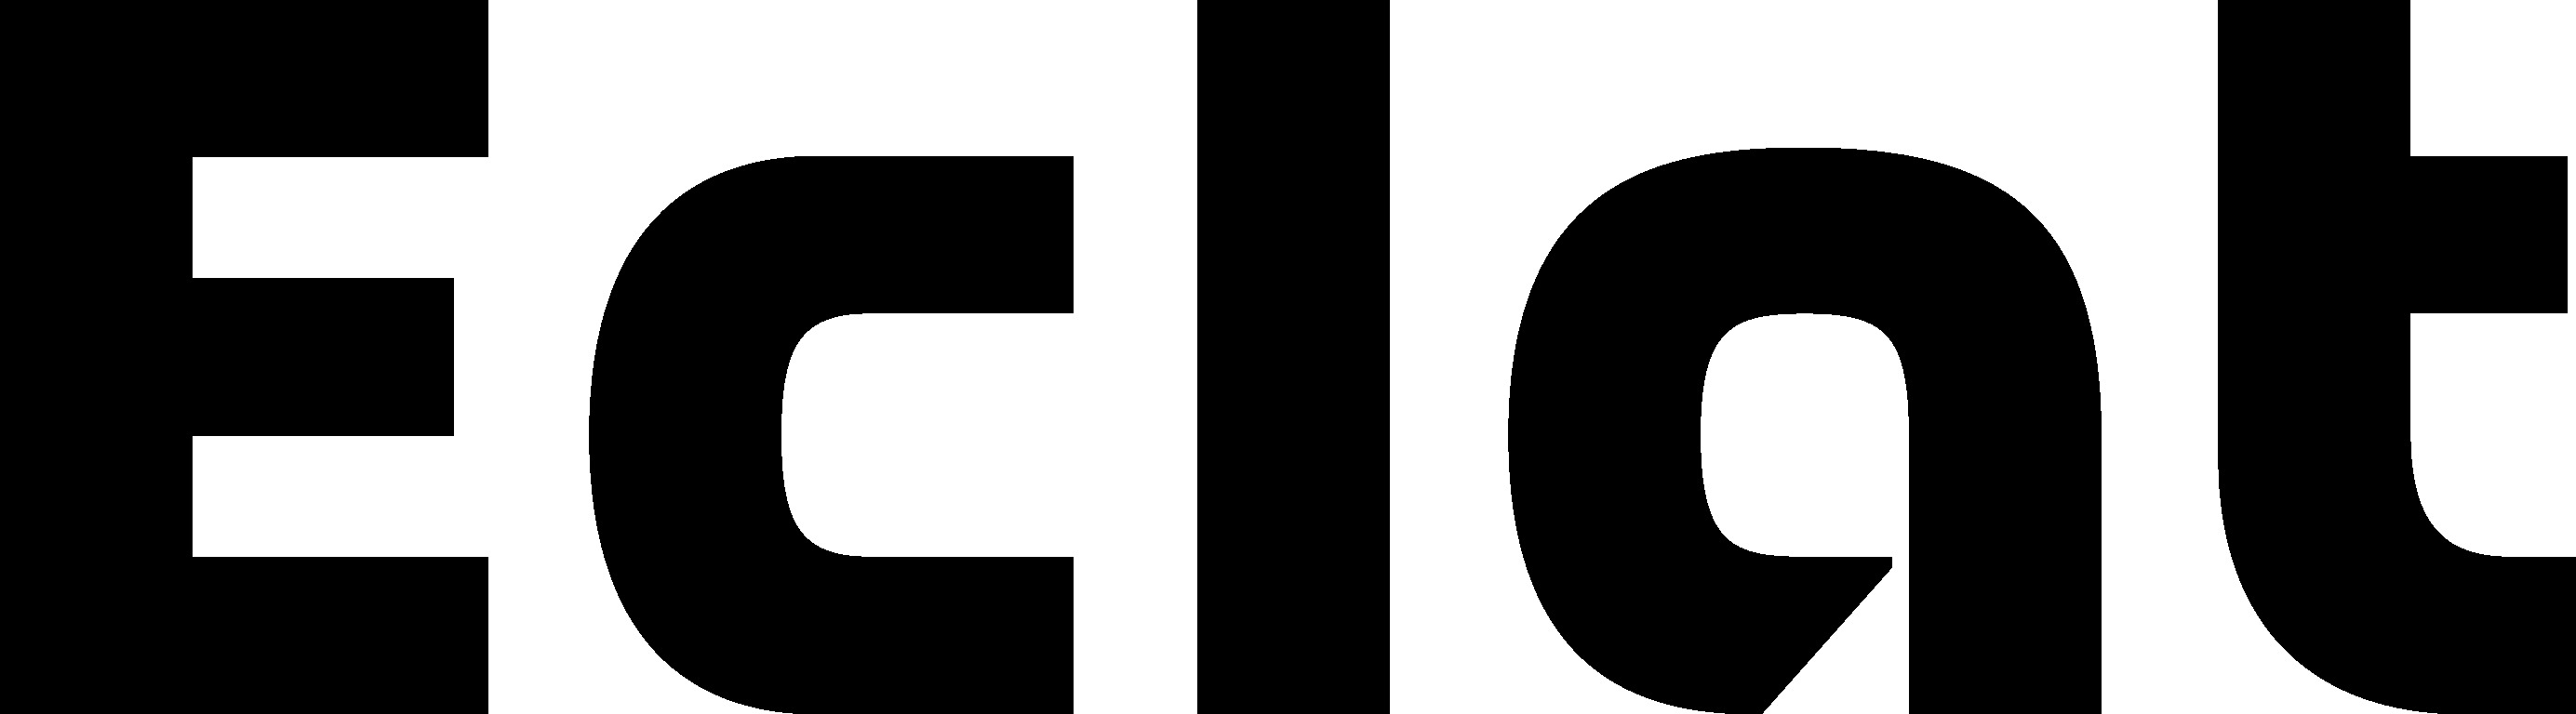 Eclat Textile Co., Ltd-Logo